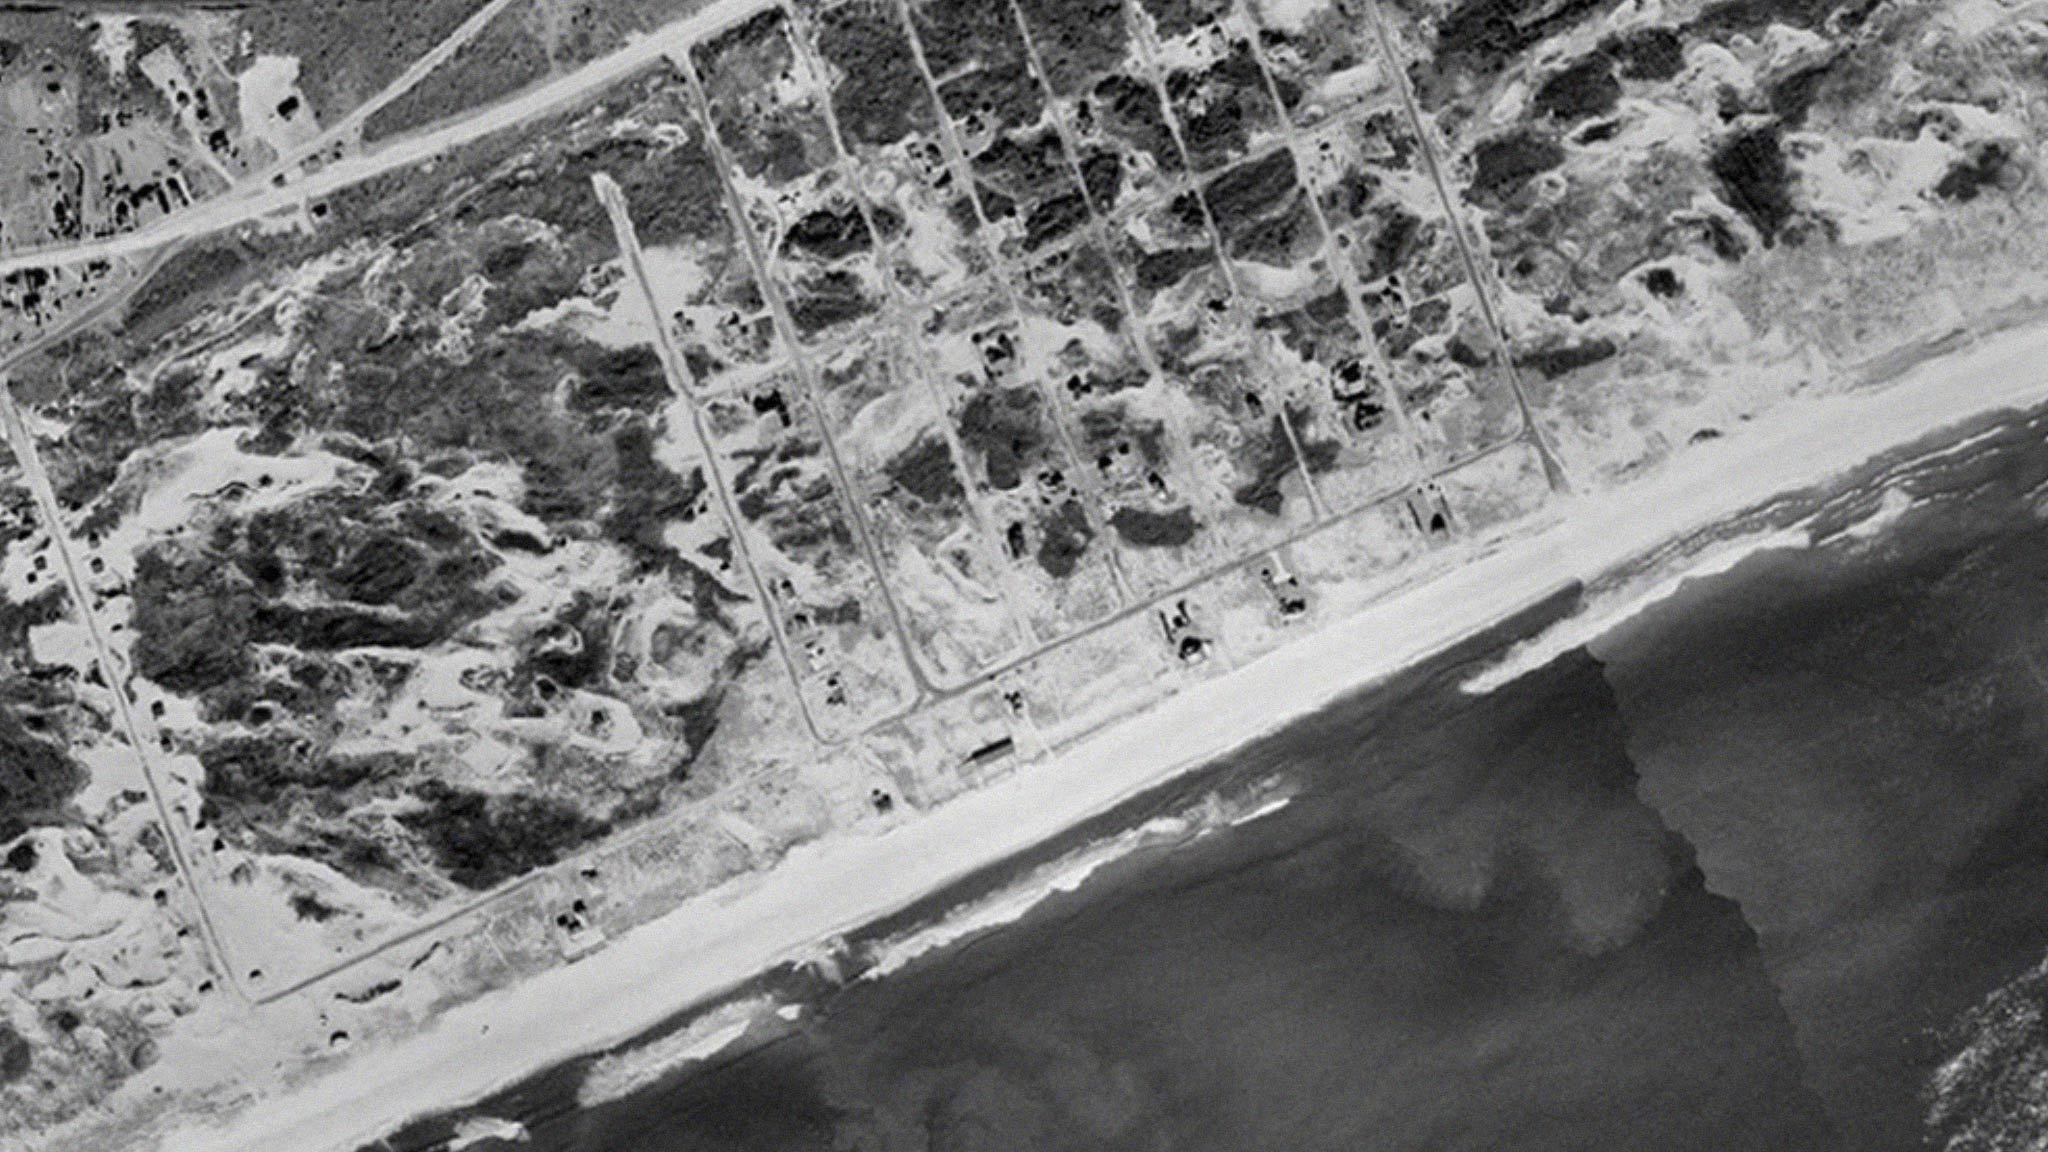 Hamptons, NY satellite image from 1954